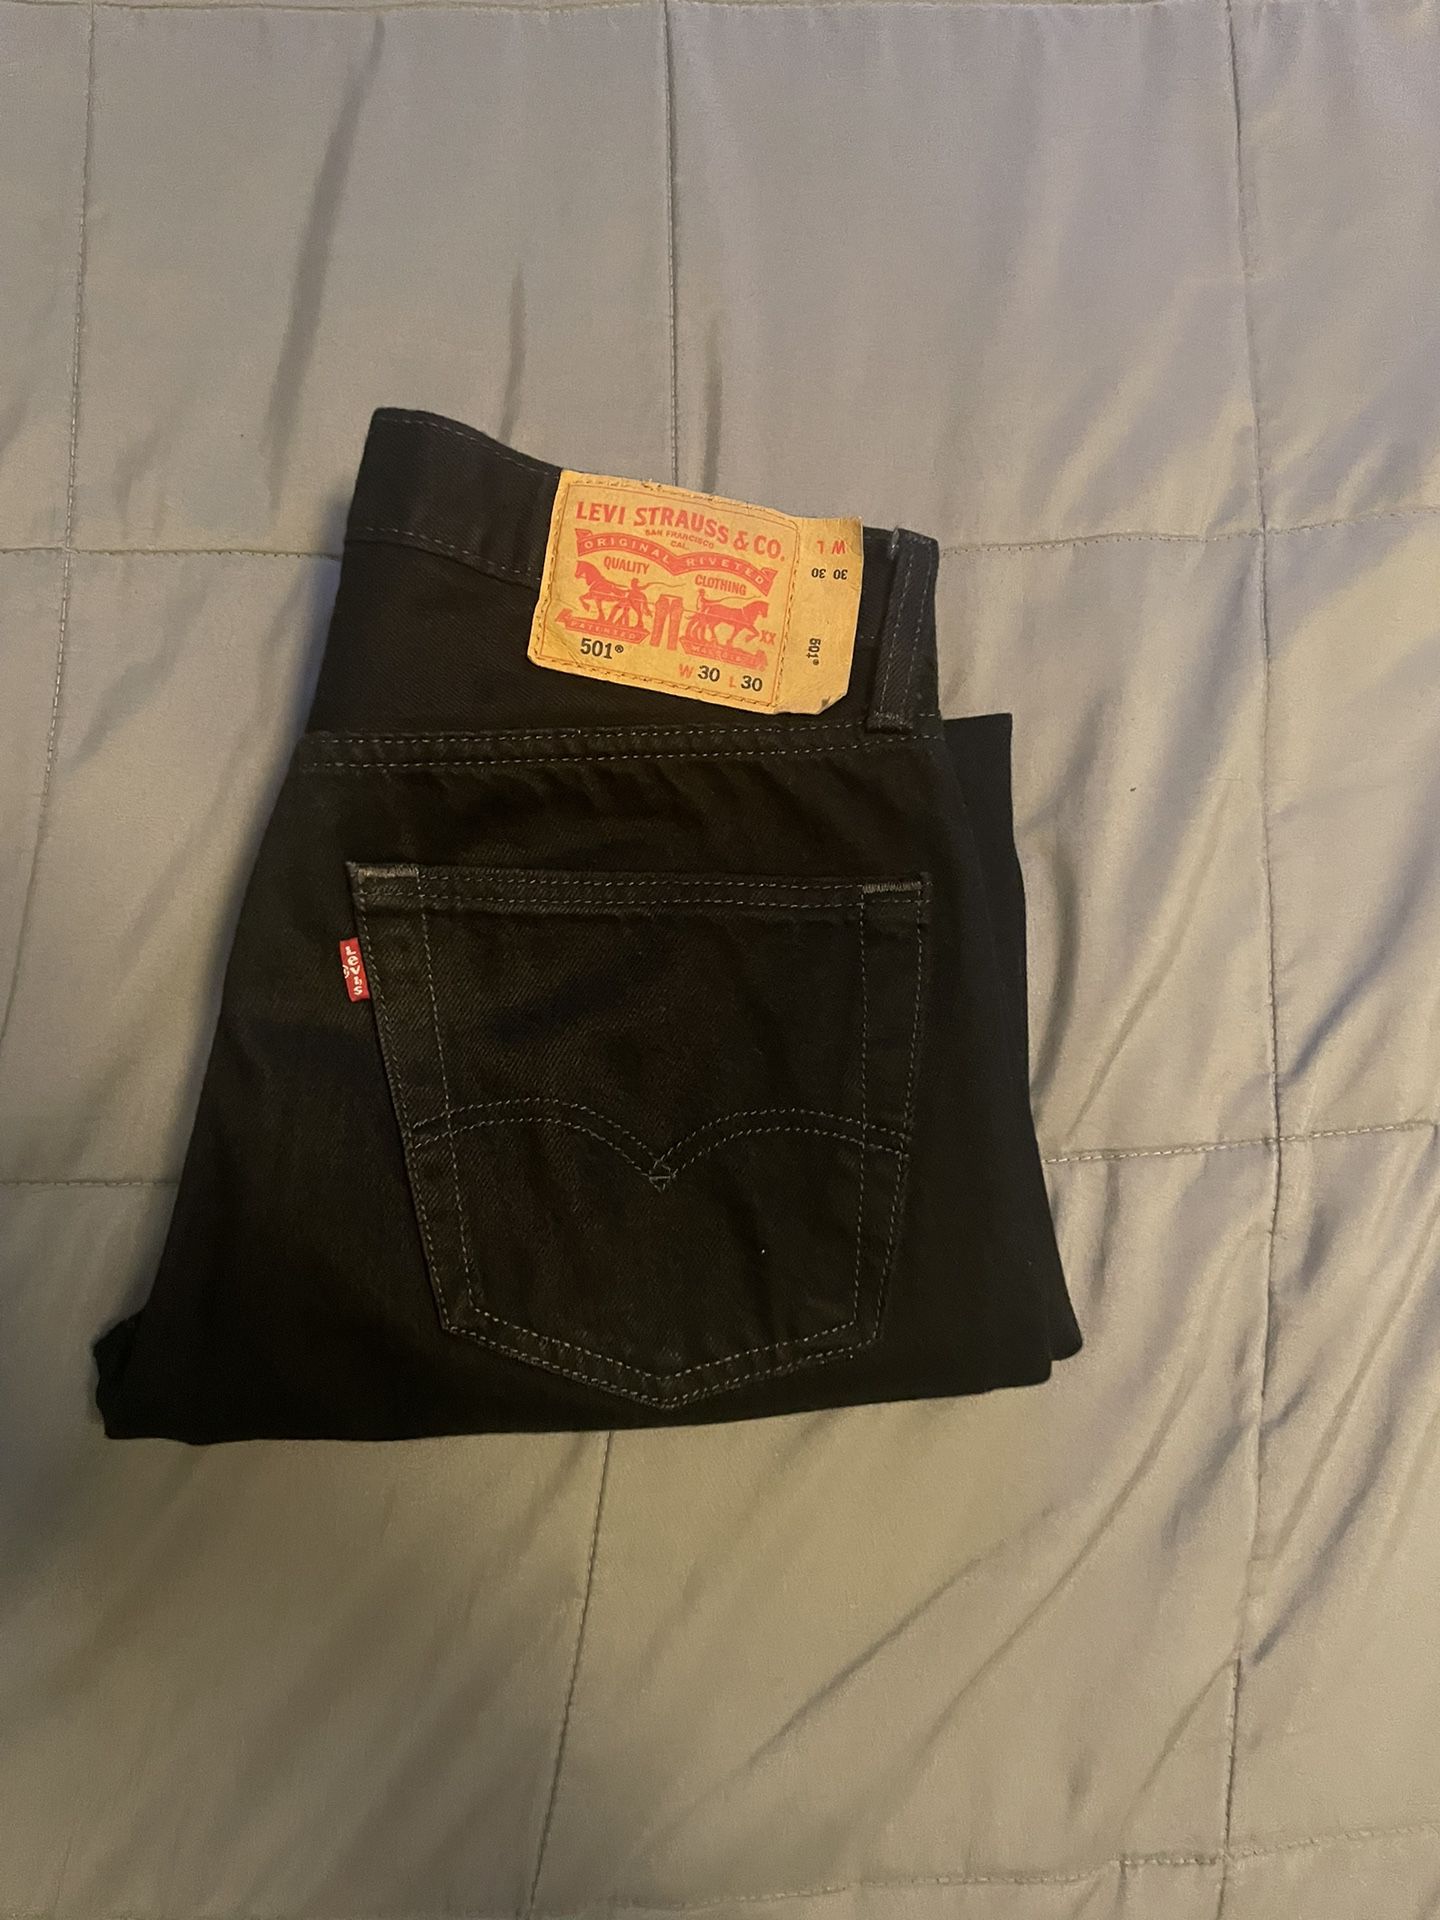 Levi’s Black Jeans 501s 30x30